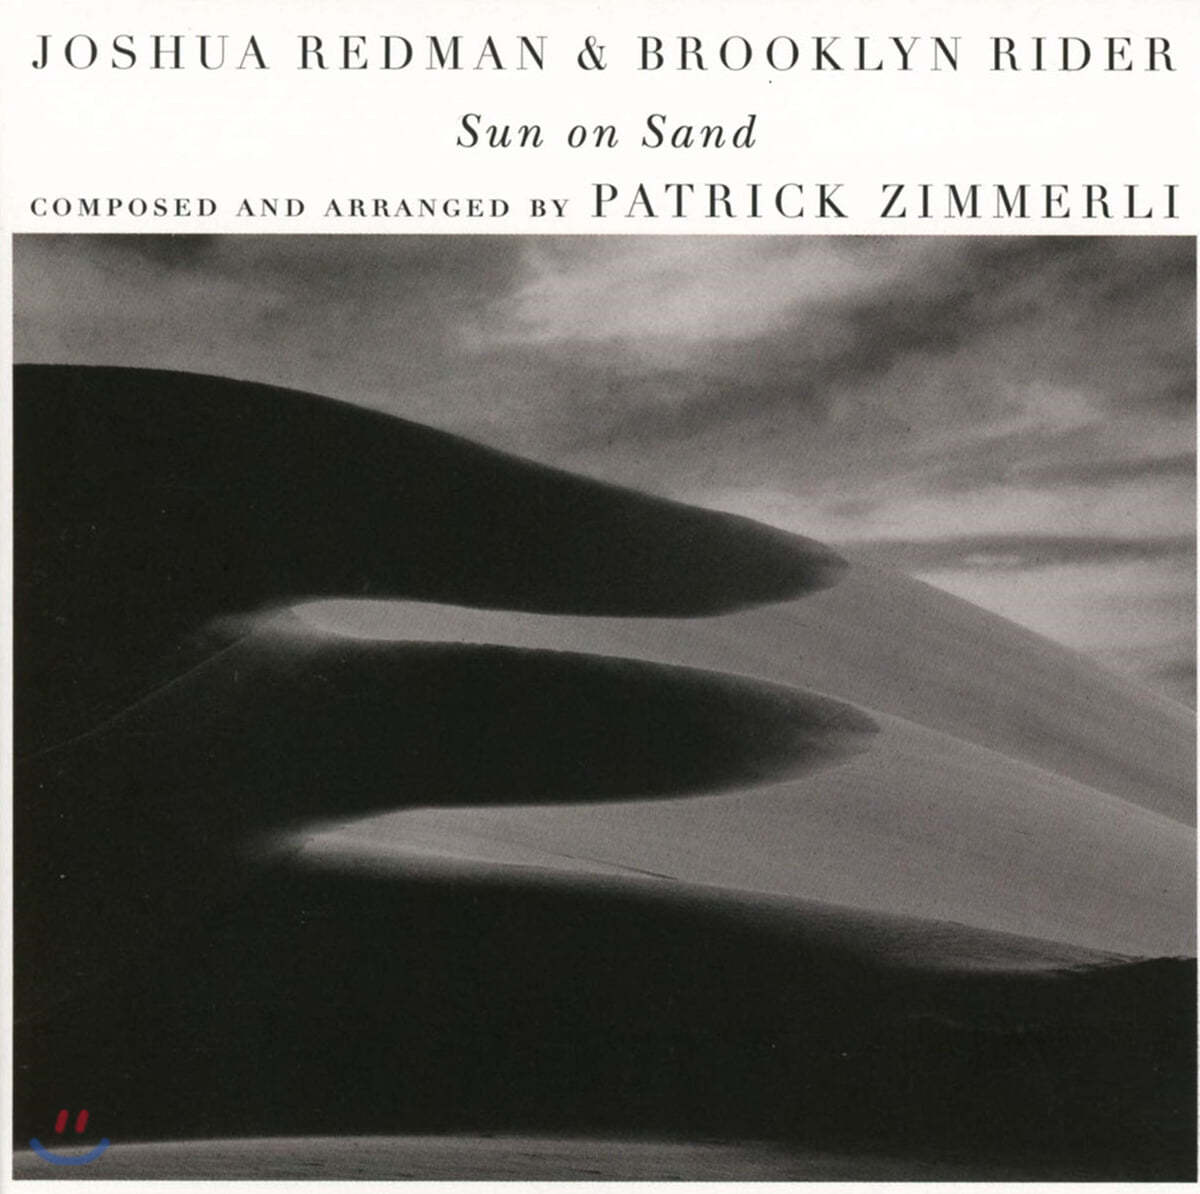 Joshua Redman &amp; Brooklyn Rider (조슈아 레드맨 &amp; 브루클린 라이더) - Sun on Sand 